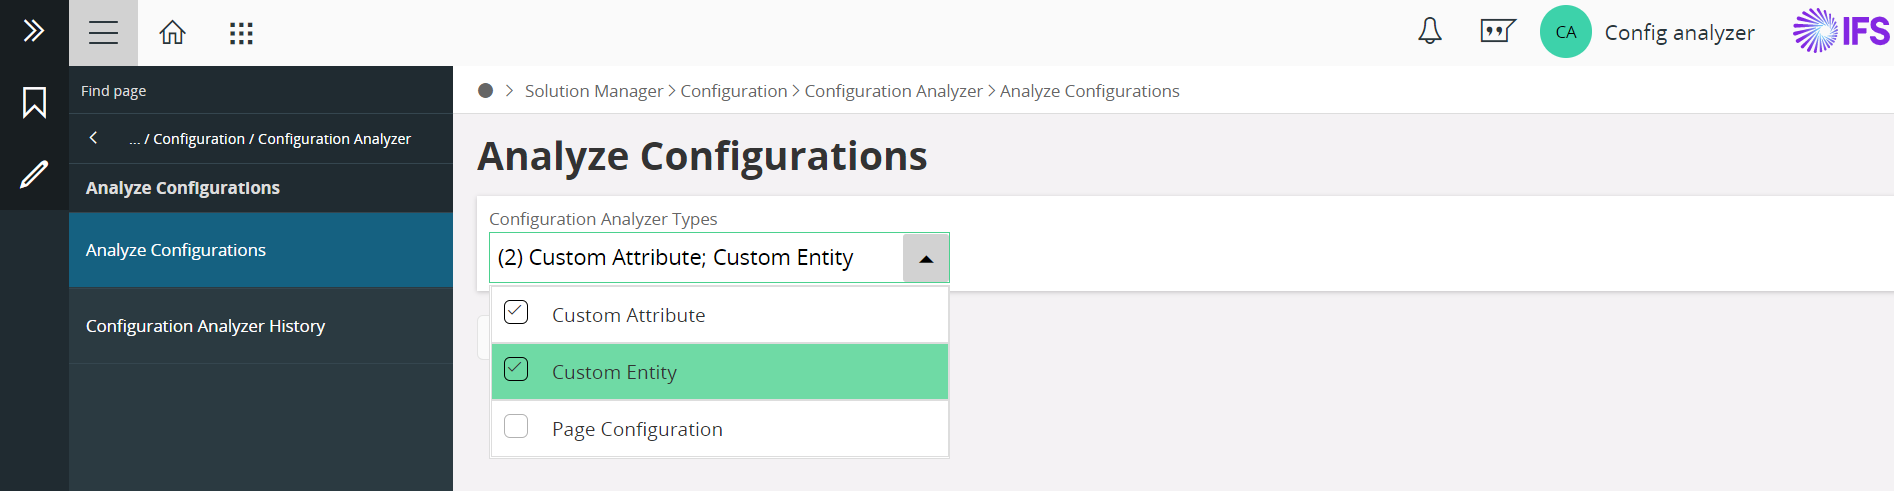 analyze_configurations